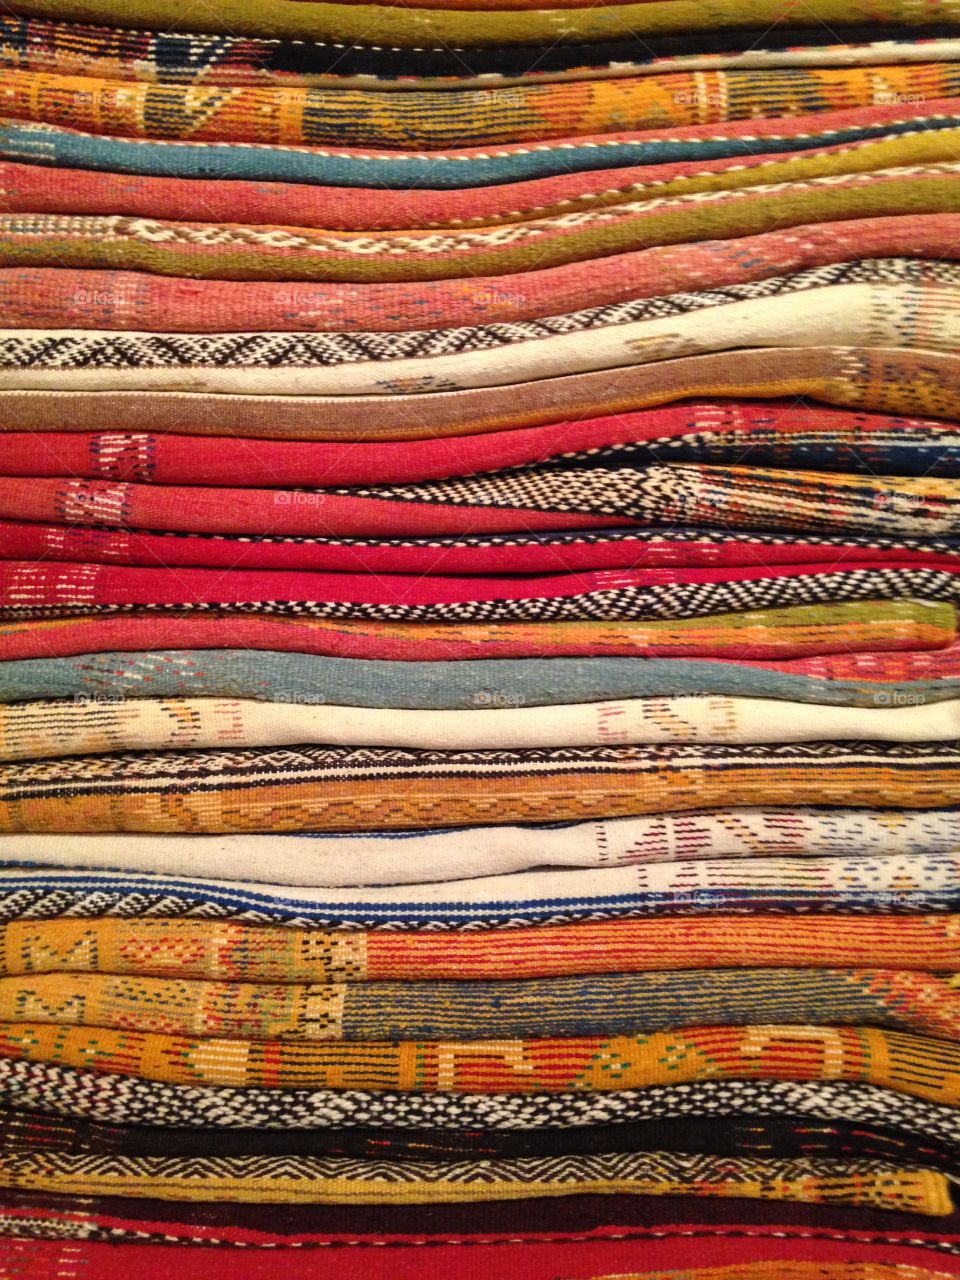 Pile of Antique Rugs in Marrakesh Market